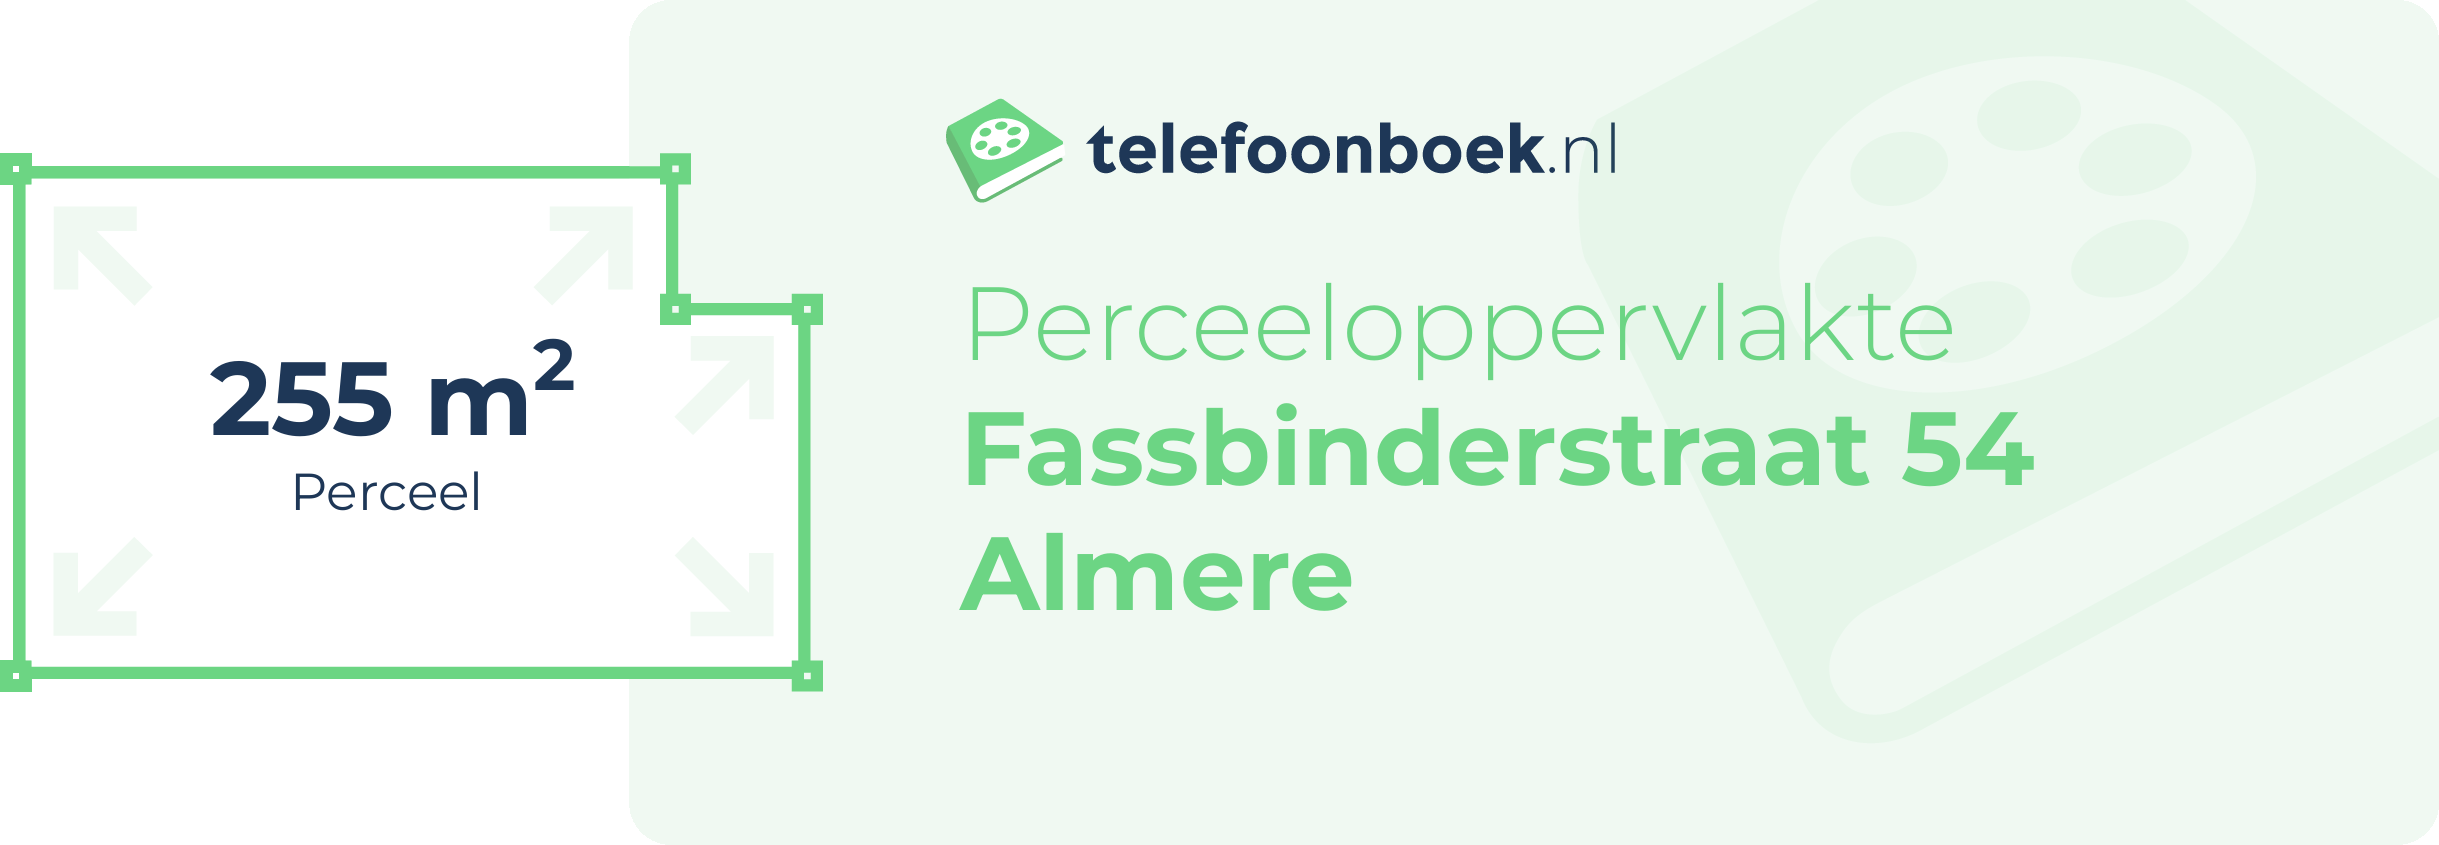 Perceeloppervlakte Fassbinderstraat 54 Almere